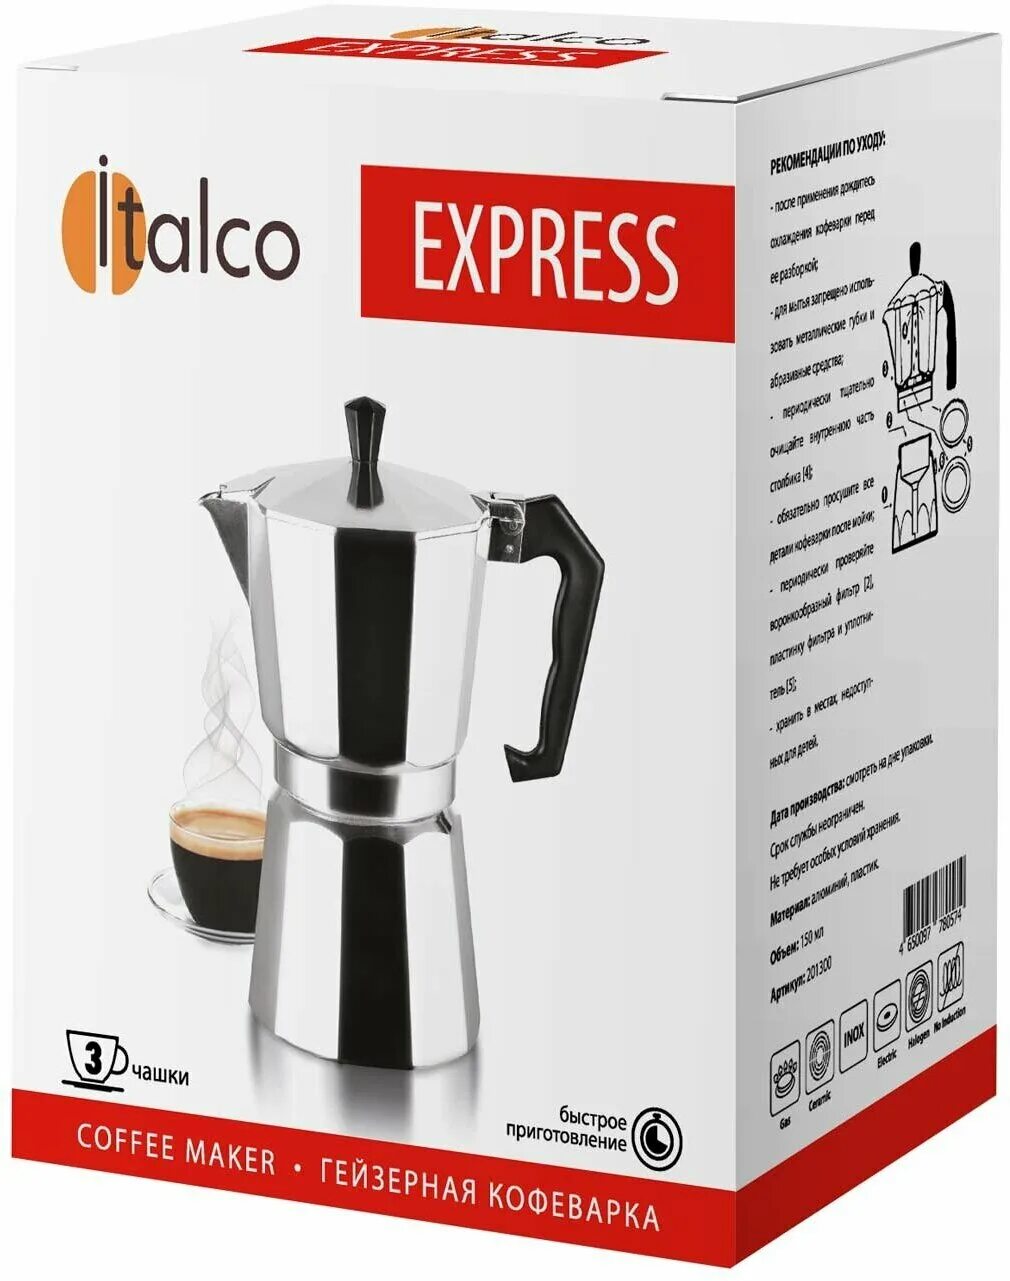 Кофеварка гейзерная italco. Гейзерная кофеварка Italco. Кофейник Italco Express 3 чашки (201300). Гейзерная кофеварка Italco Express. Utqpthyfz rjatdfhrf шефдшсщ Expresso.